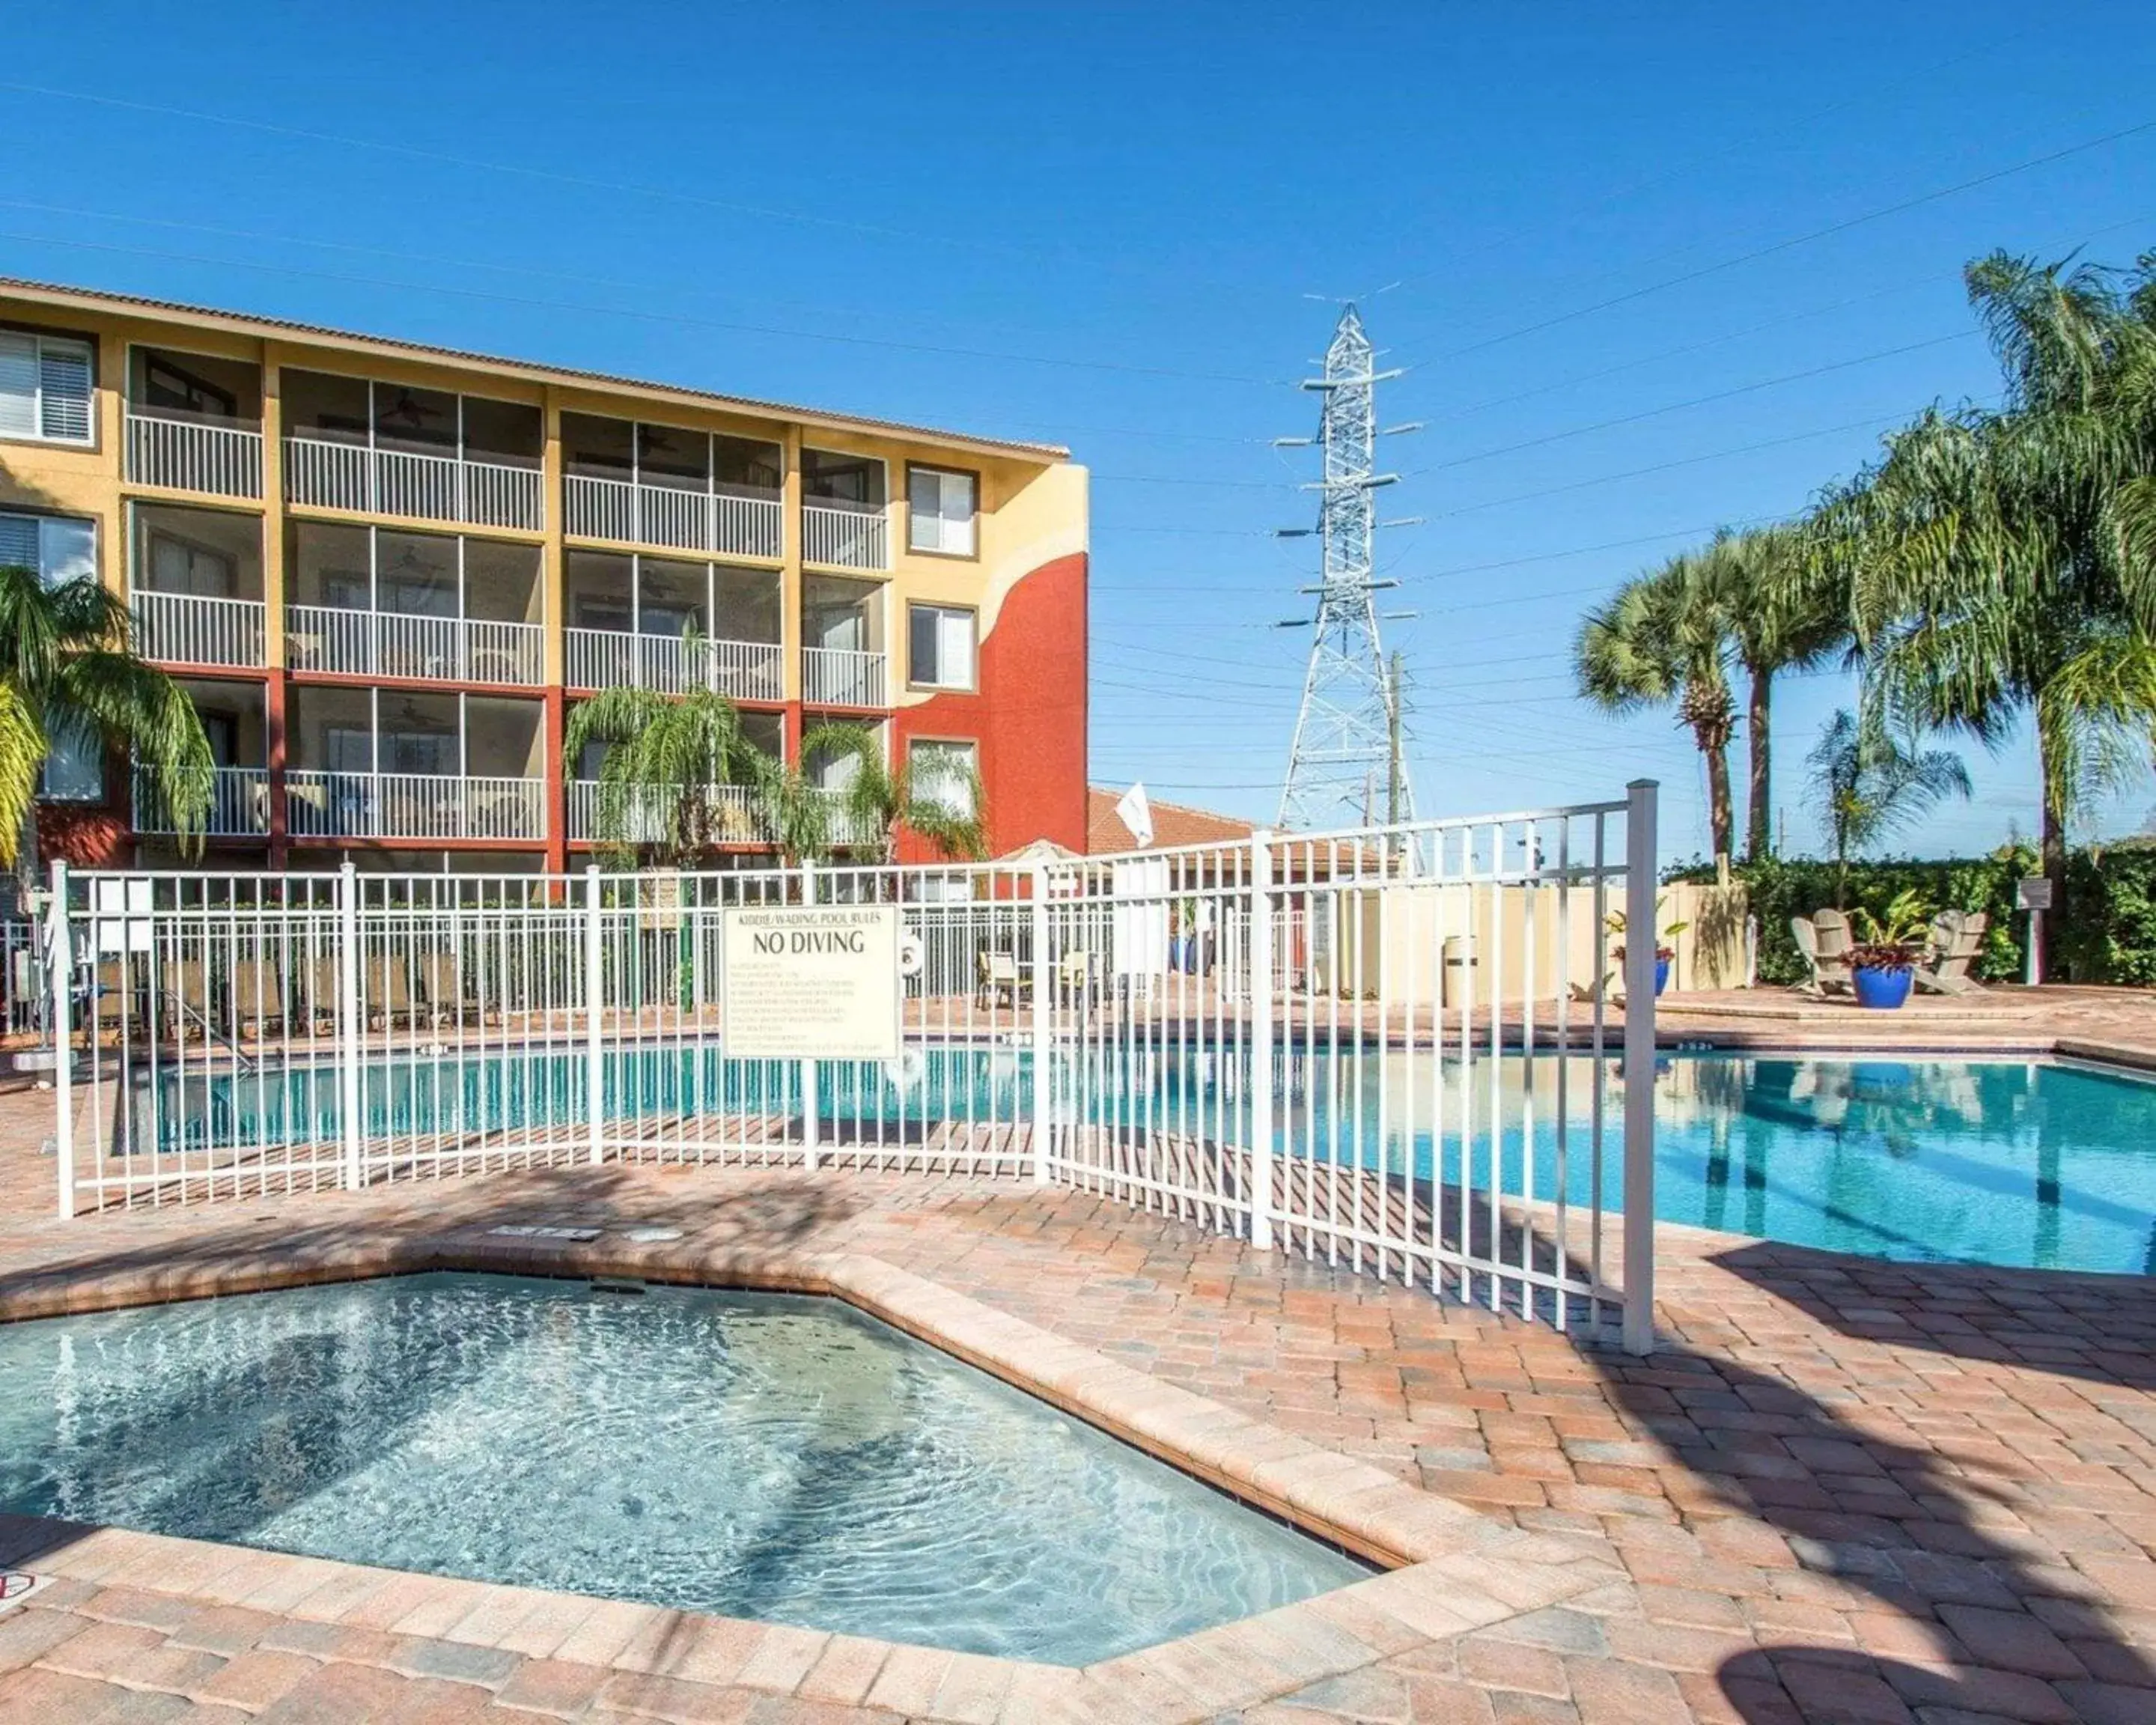 On site, Swimming Pool in Bluegreen Vacations Orlando's Sunshine Resort